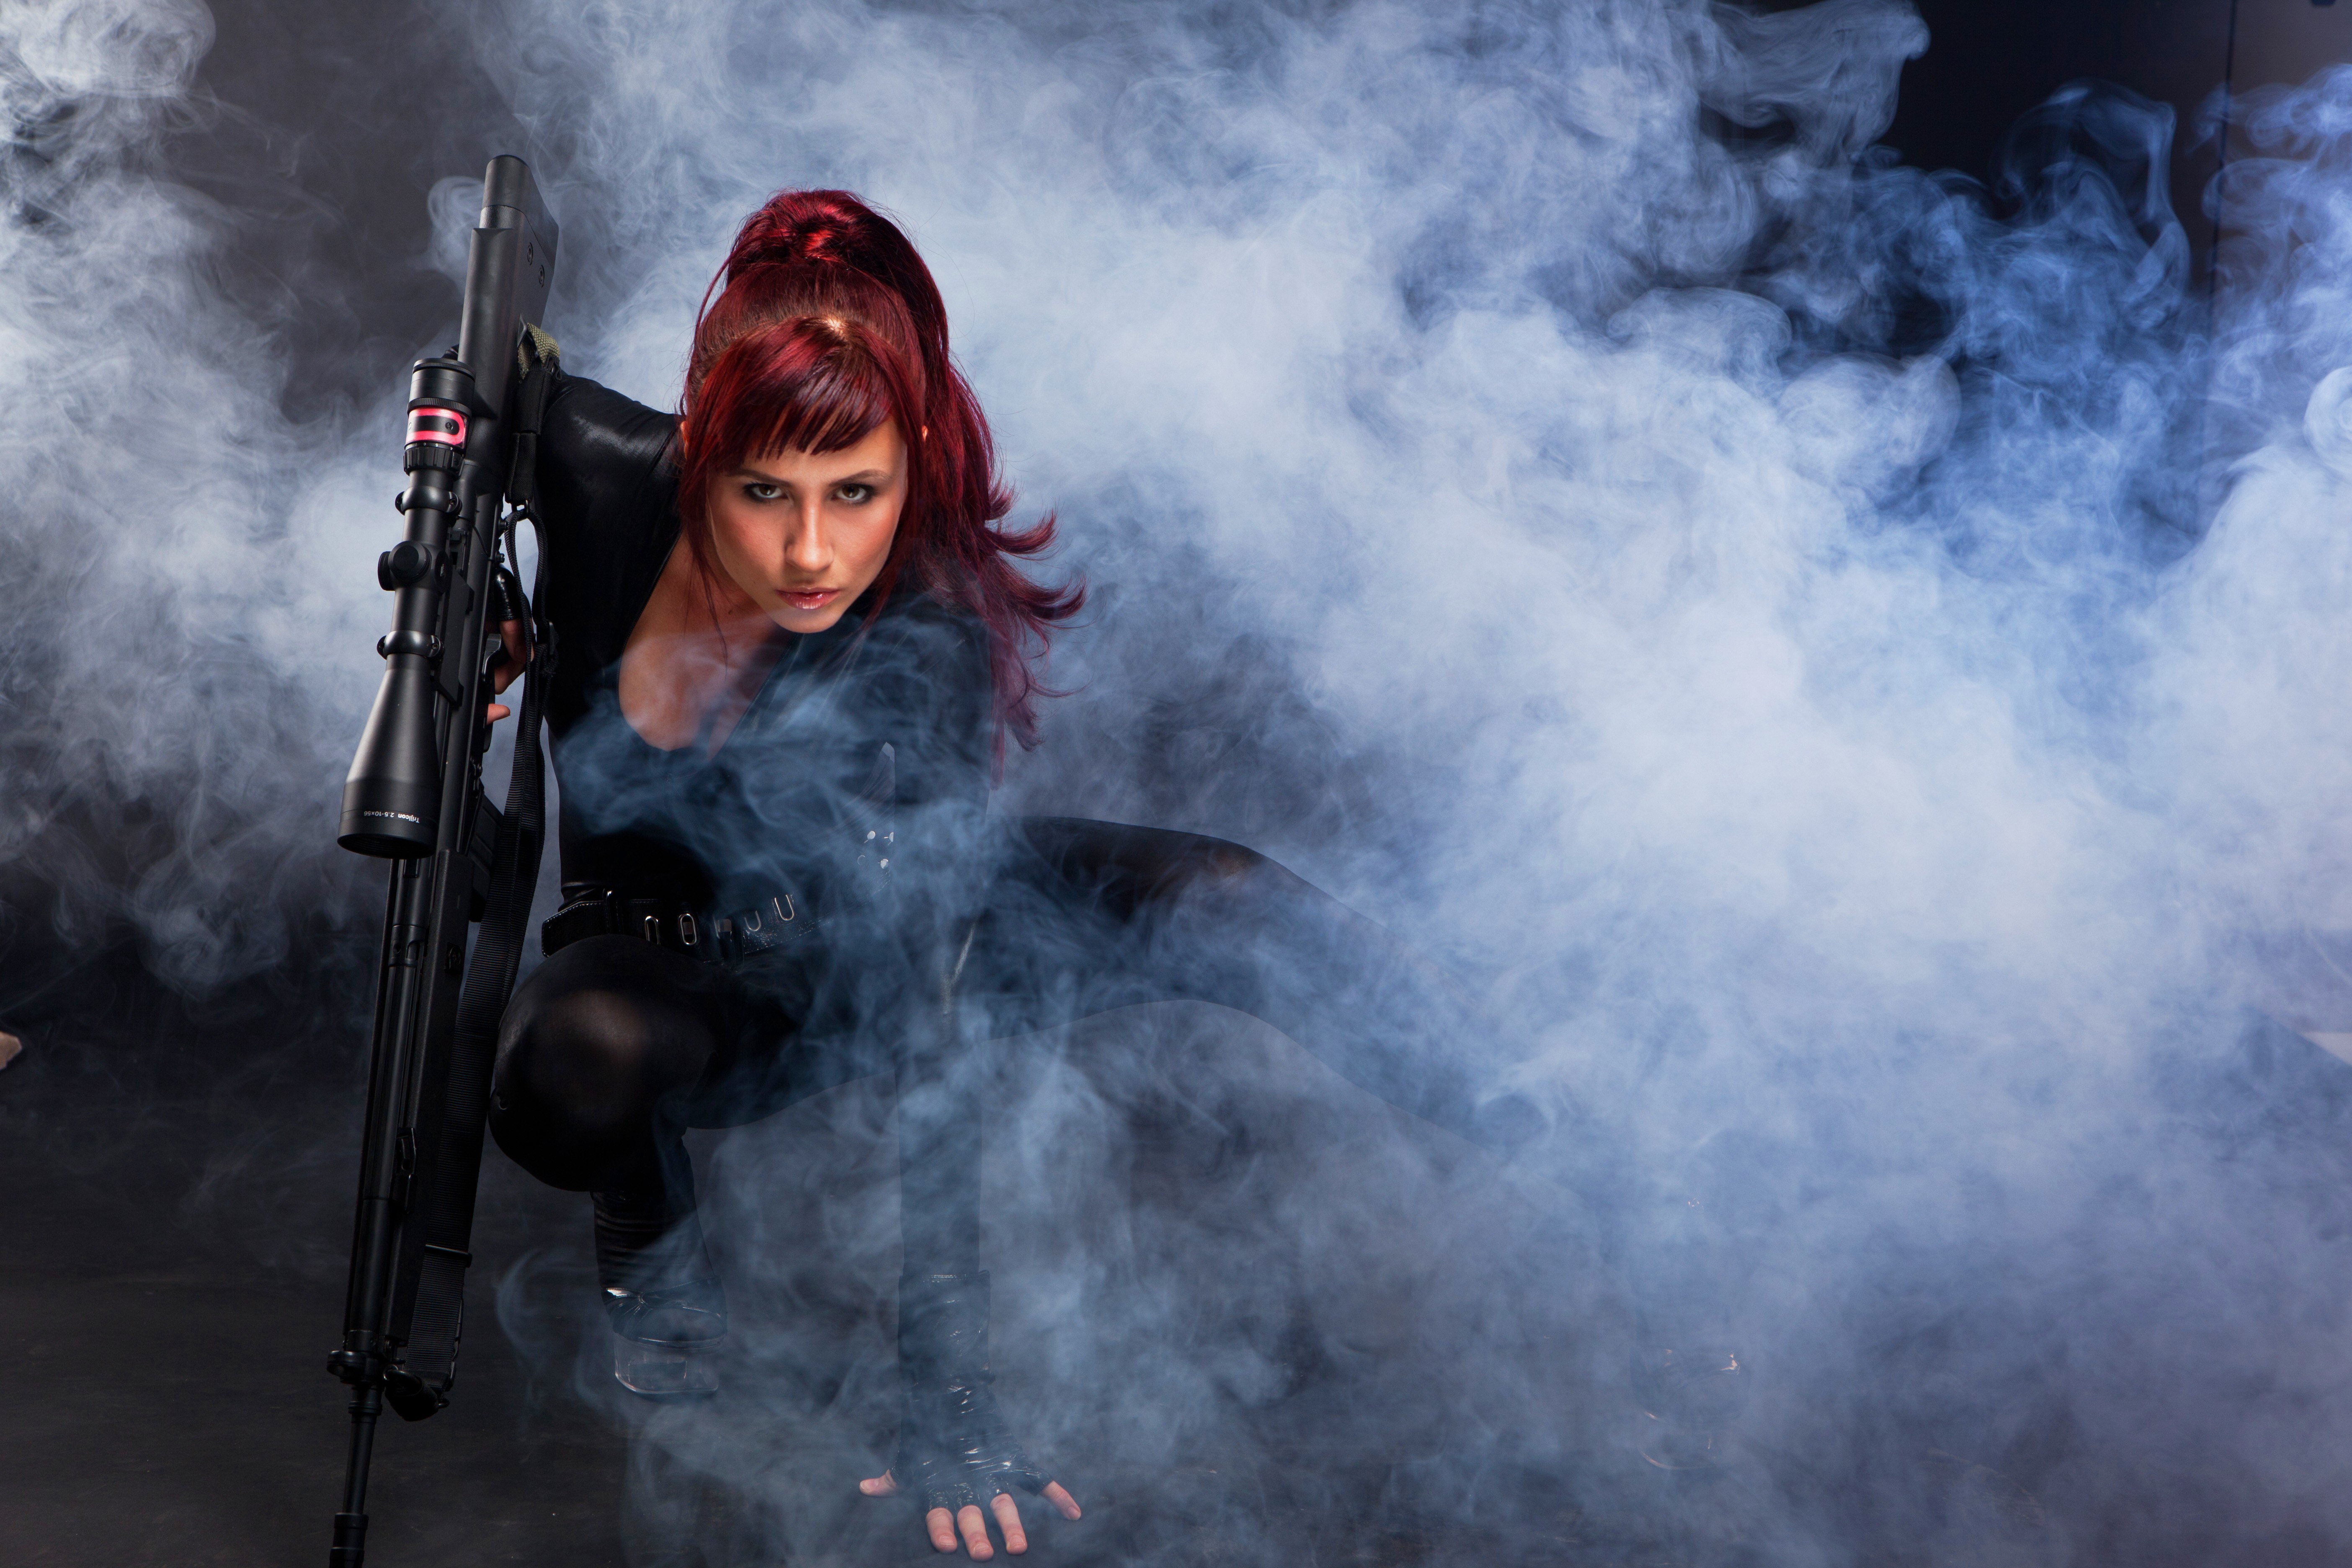 People 5616x3744 redhead sniper rifle women smoke model weapon cosplay Black Widow frontal view DeviantArt girls with guns